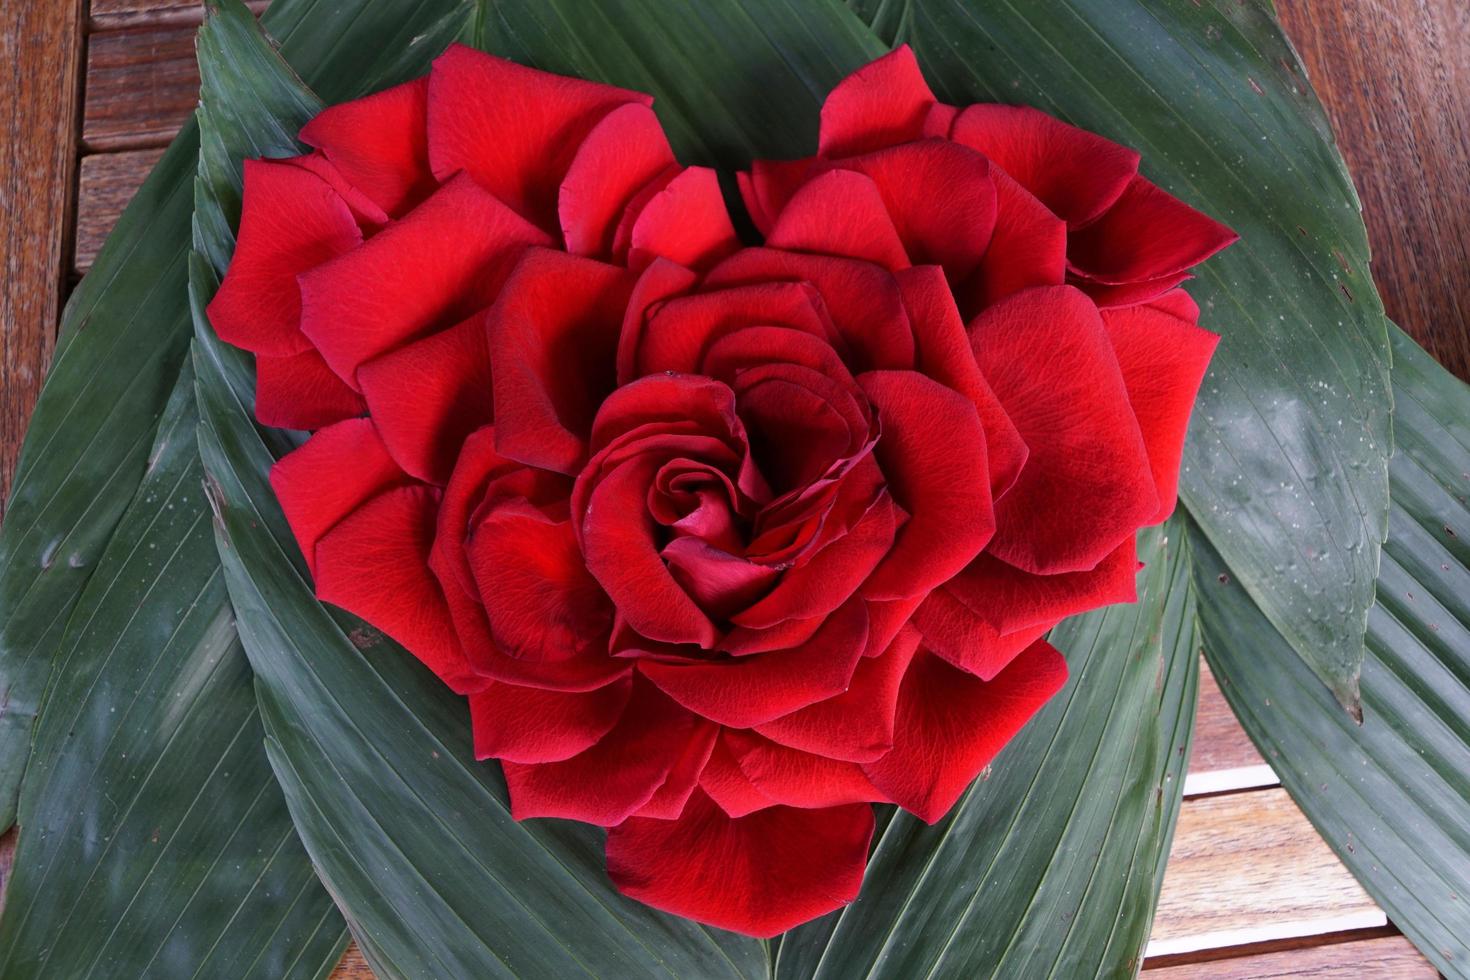 cuore fatto di petali di rose rosse foto